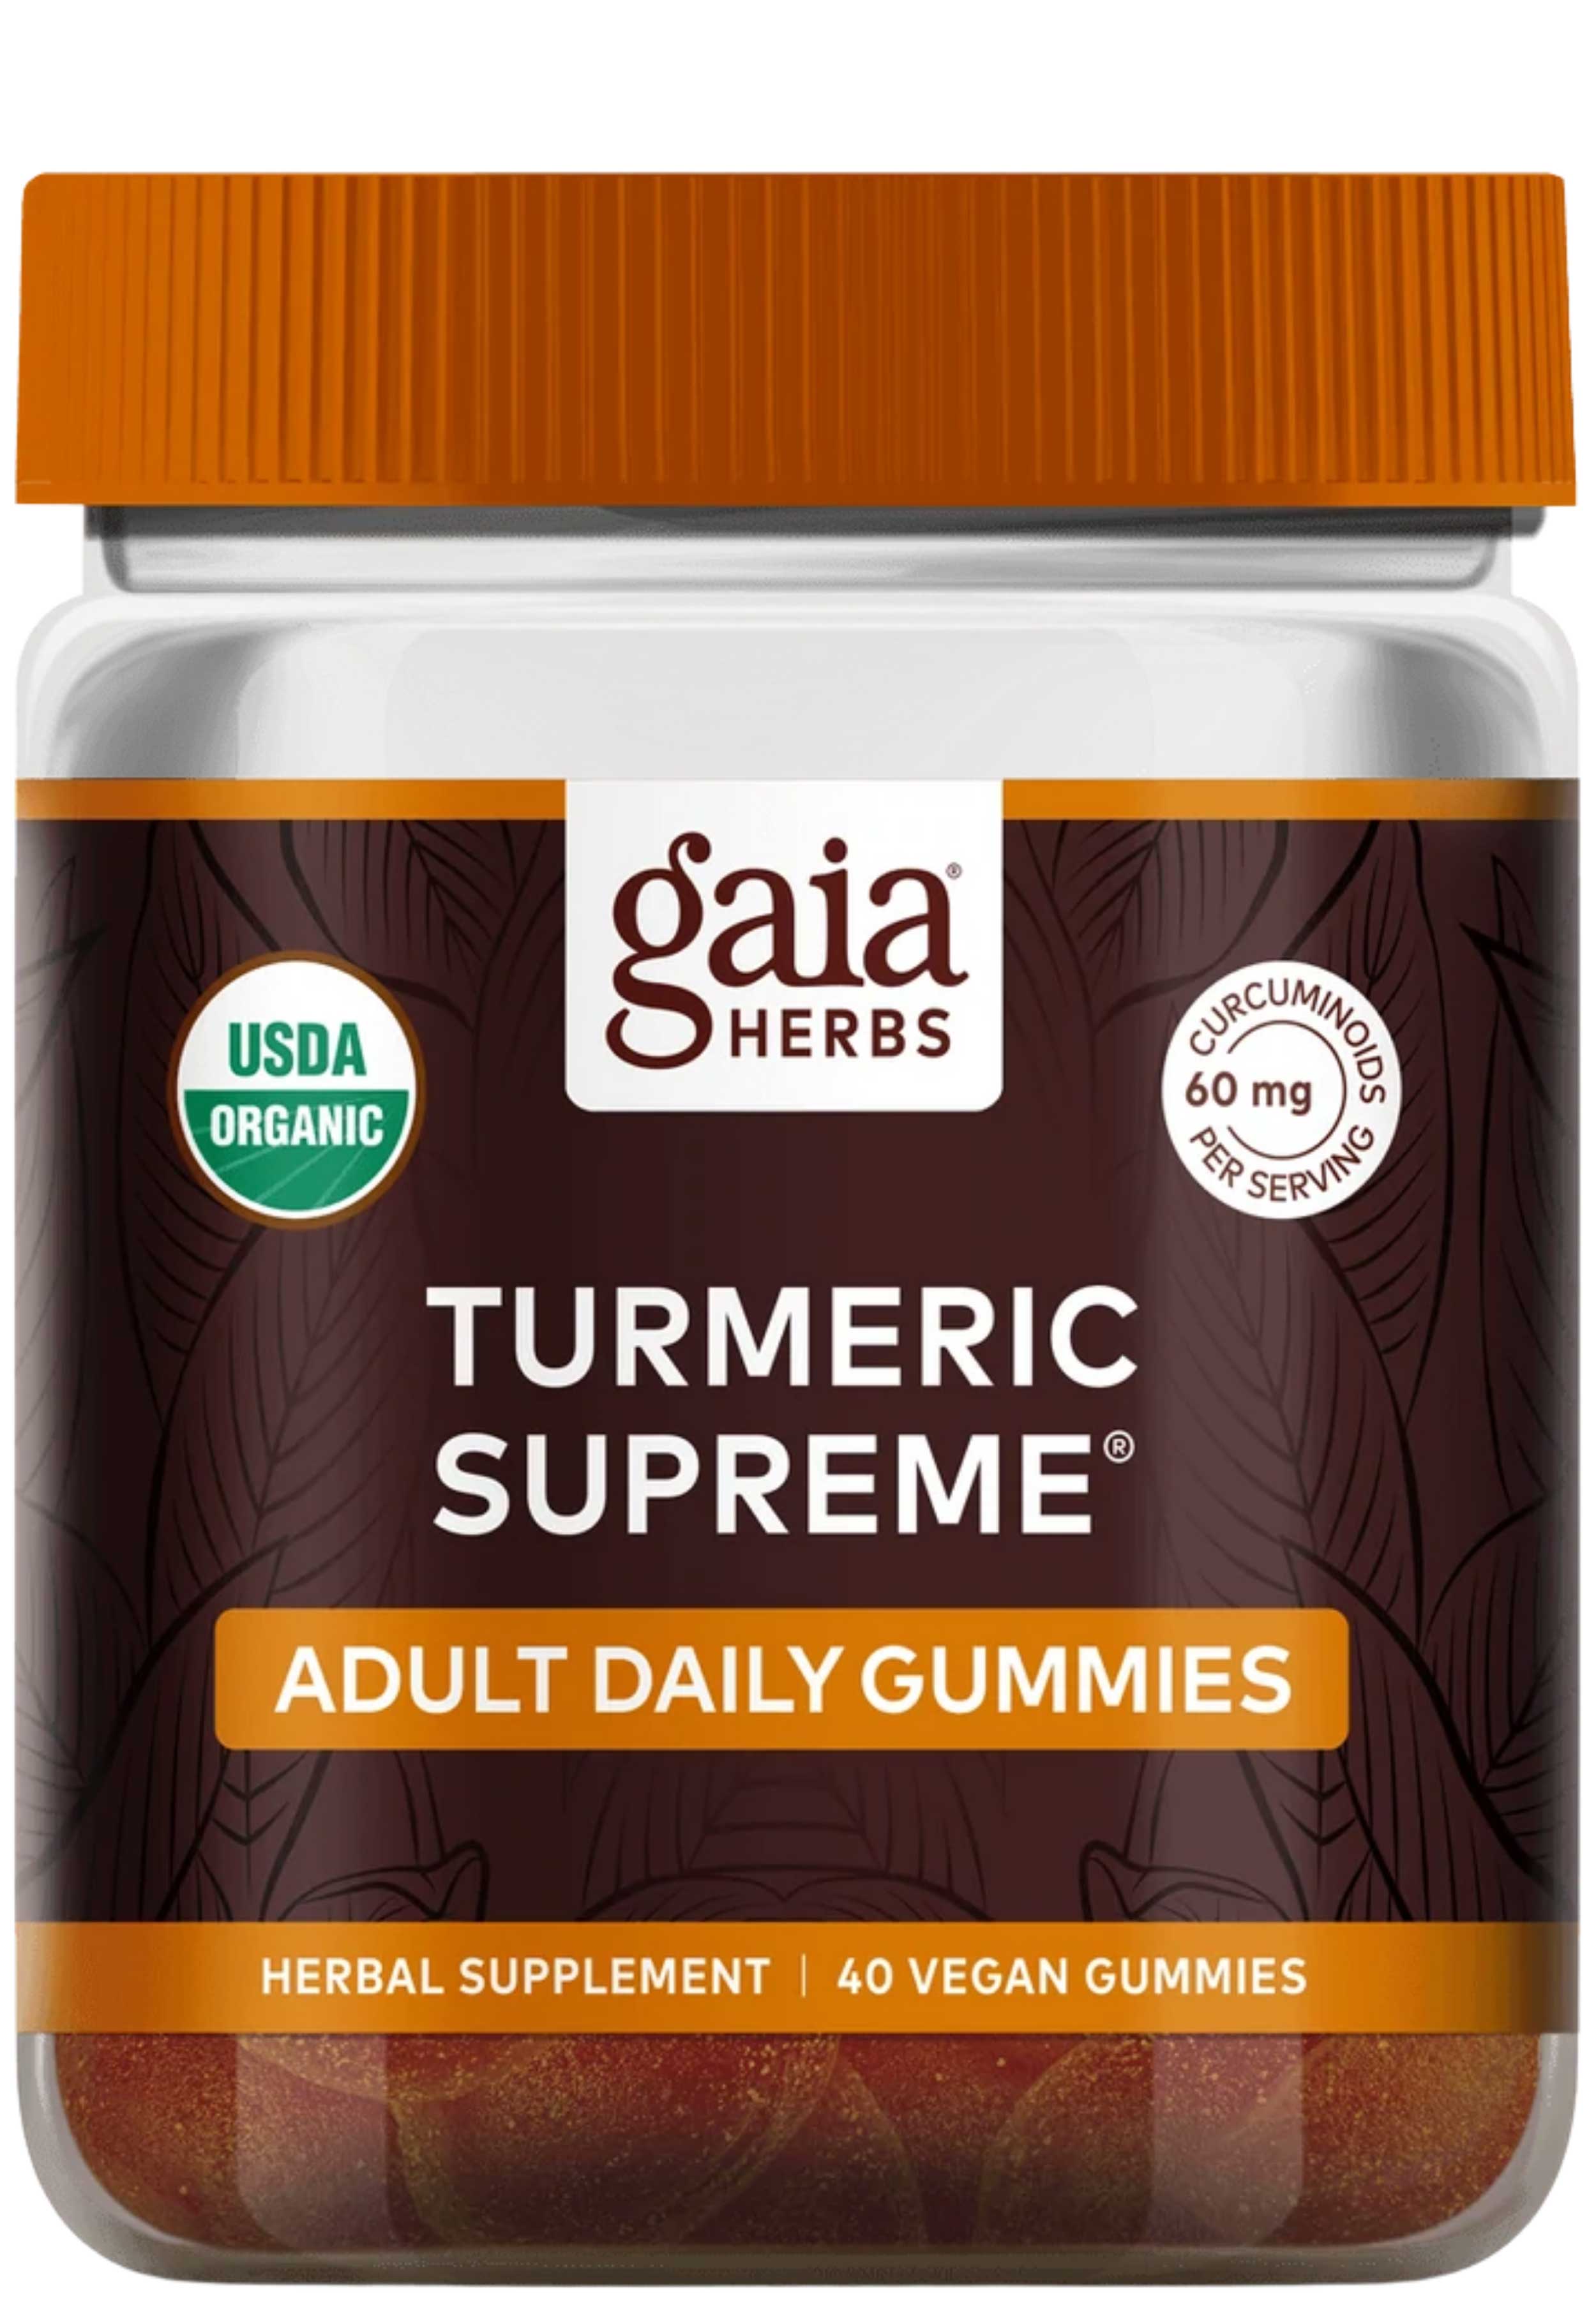 Gaia Herbs Turmeric Supreme Adult Daily